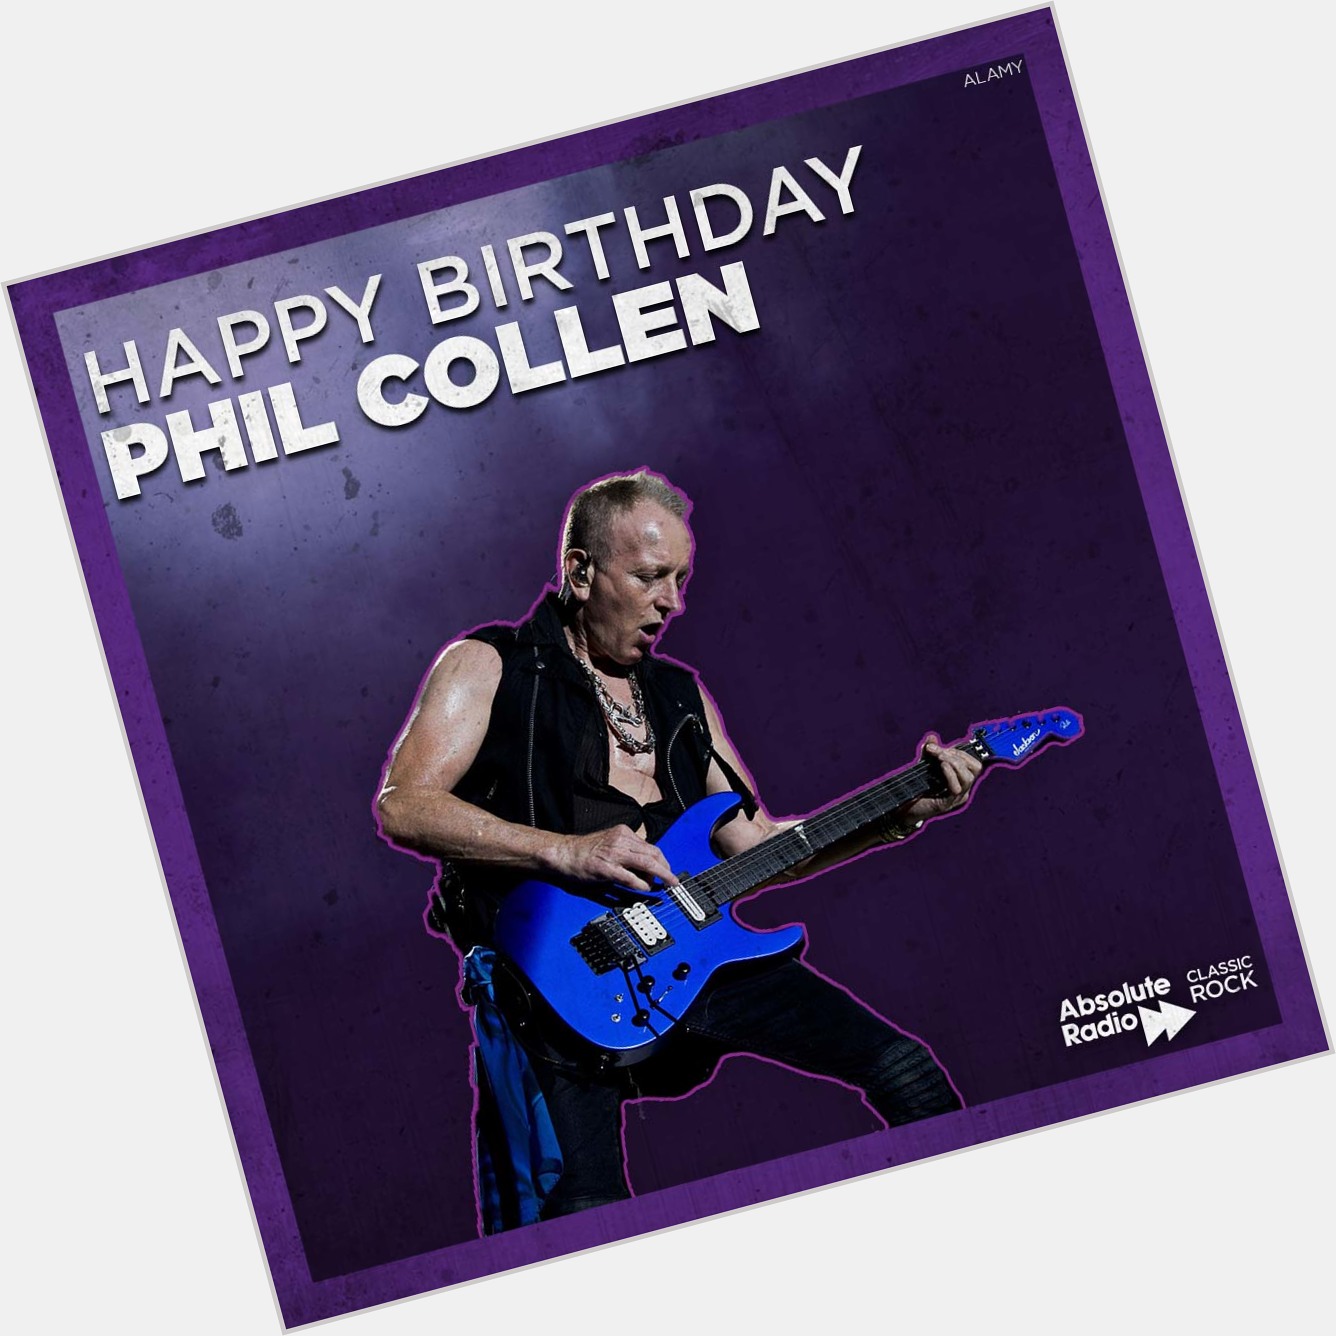 Happy birthday to guitarist, Phil Collen! 